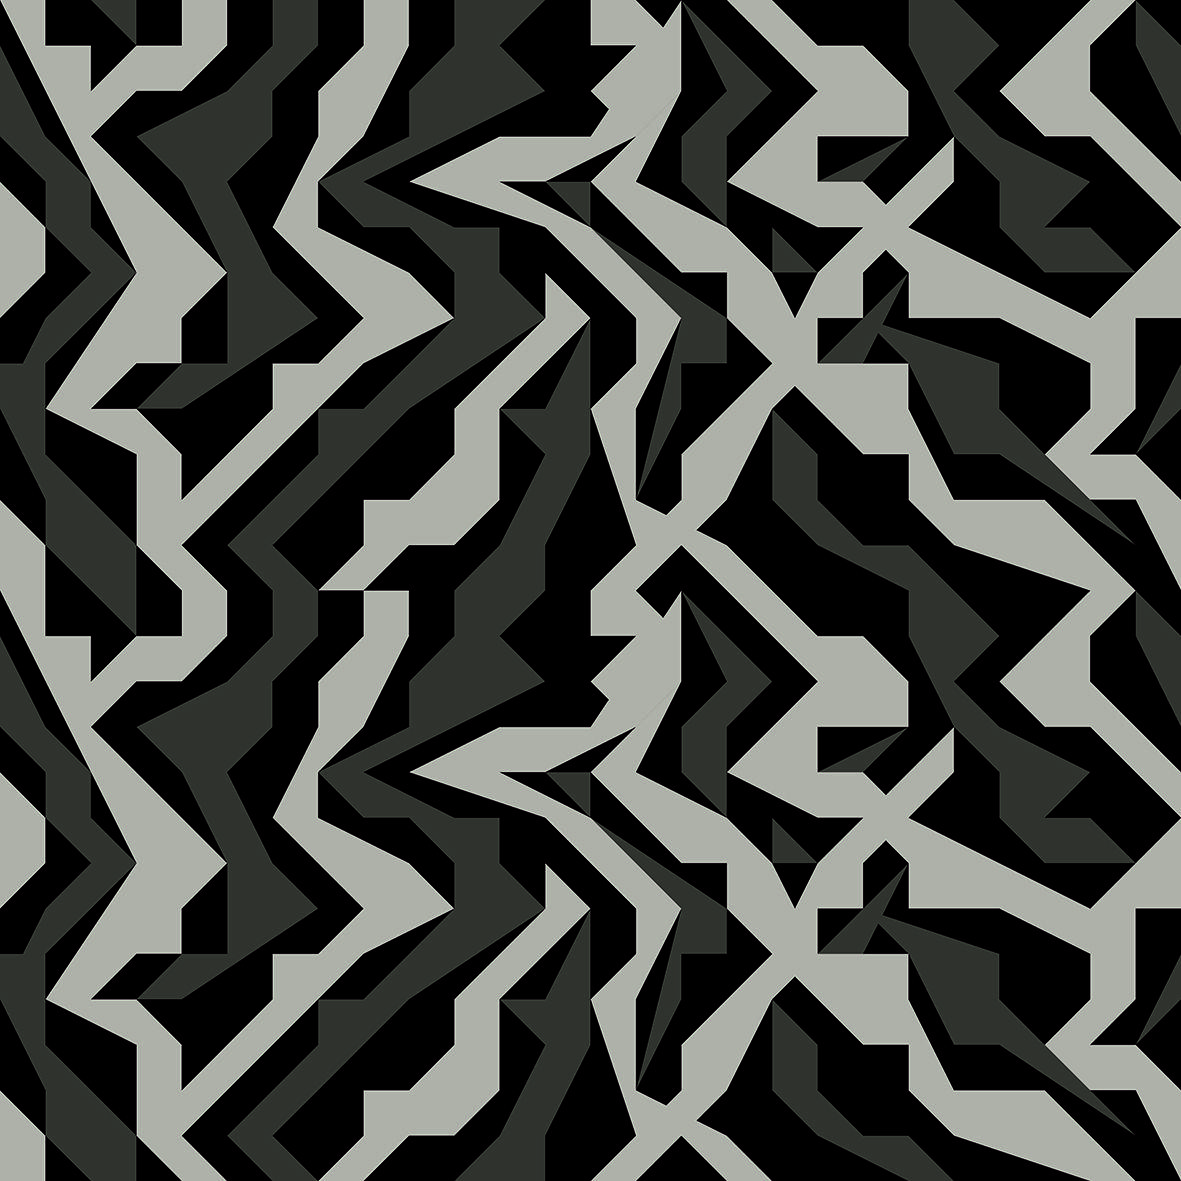 Camouflage wallpaper urban grid graphic